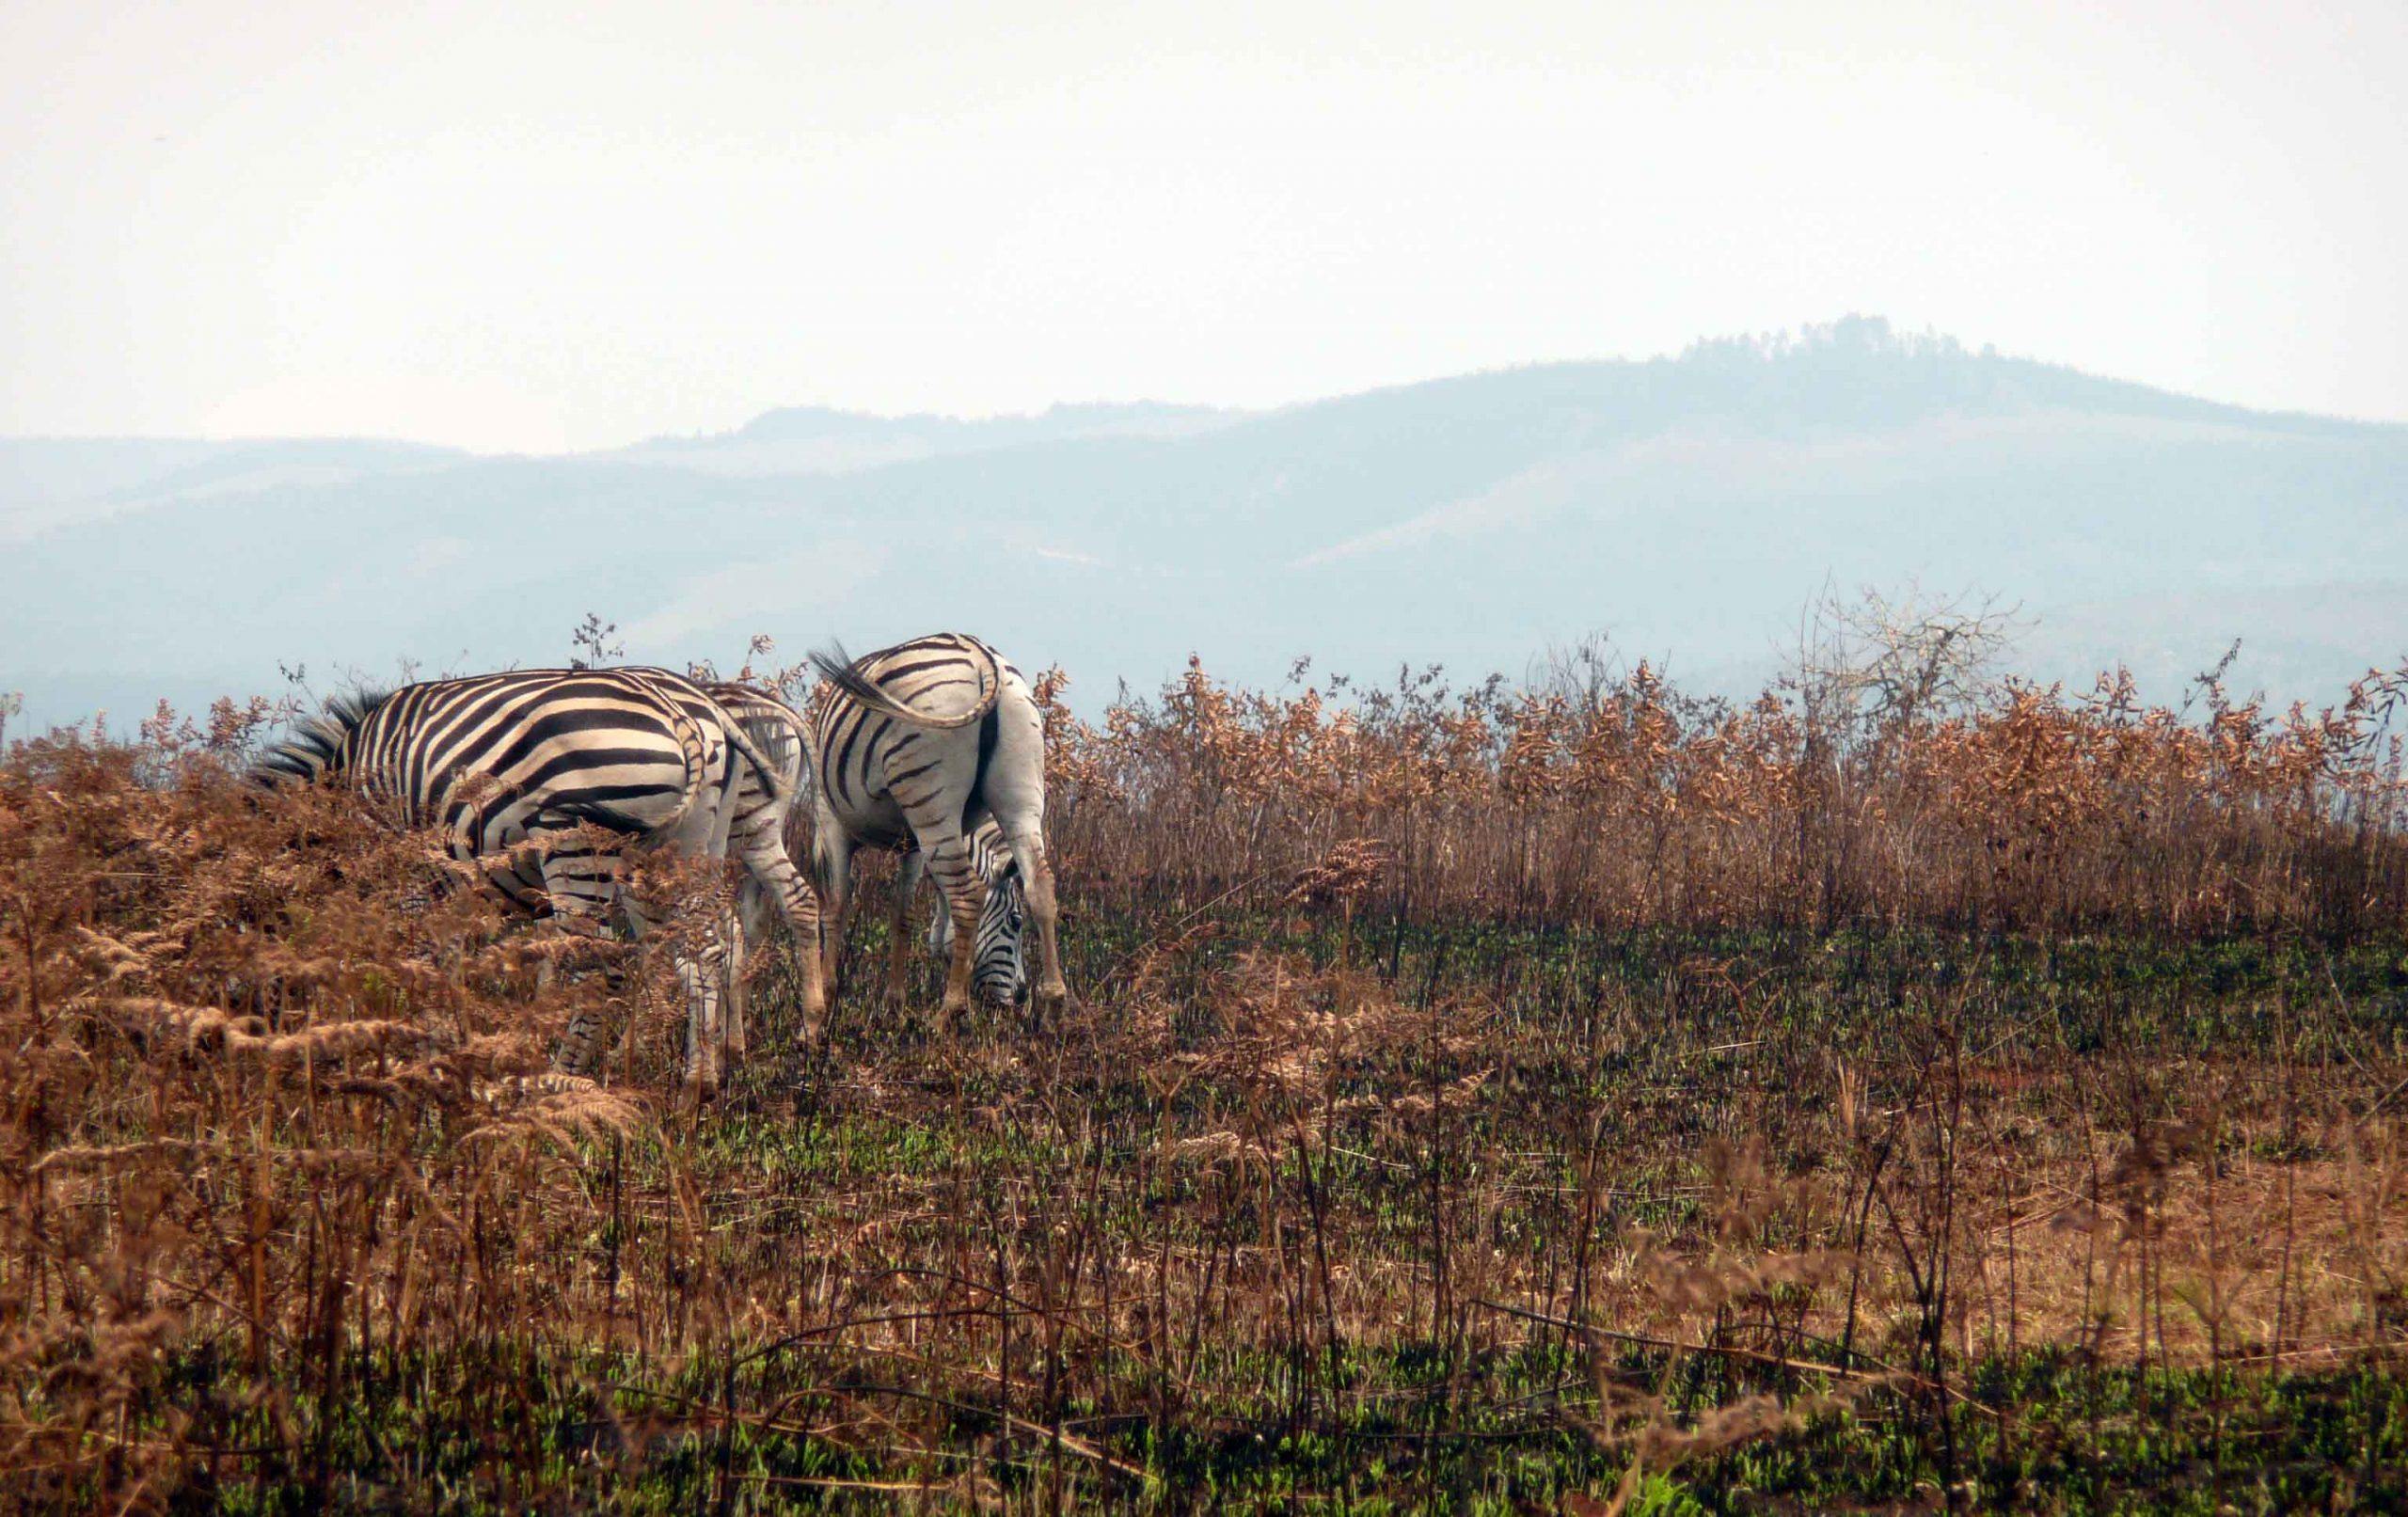 Zebras in Mlilwane Wildlife Sanctuary eSwatini